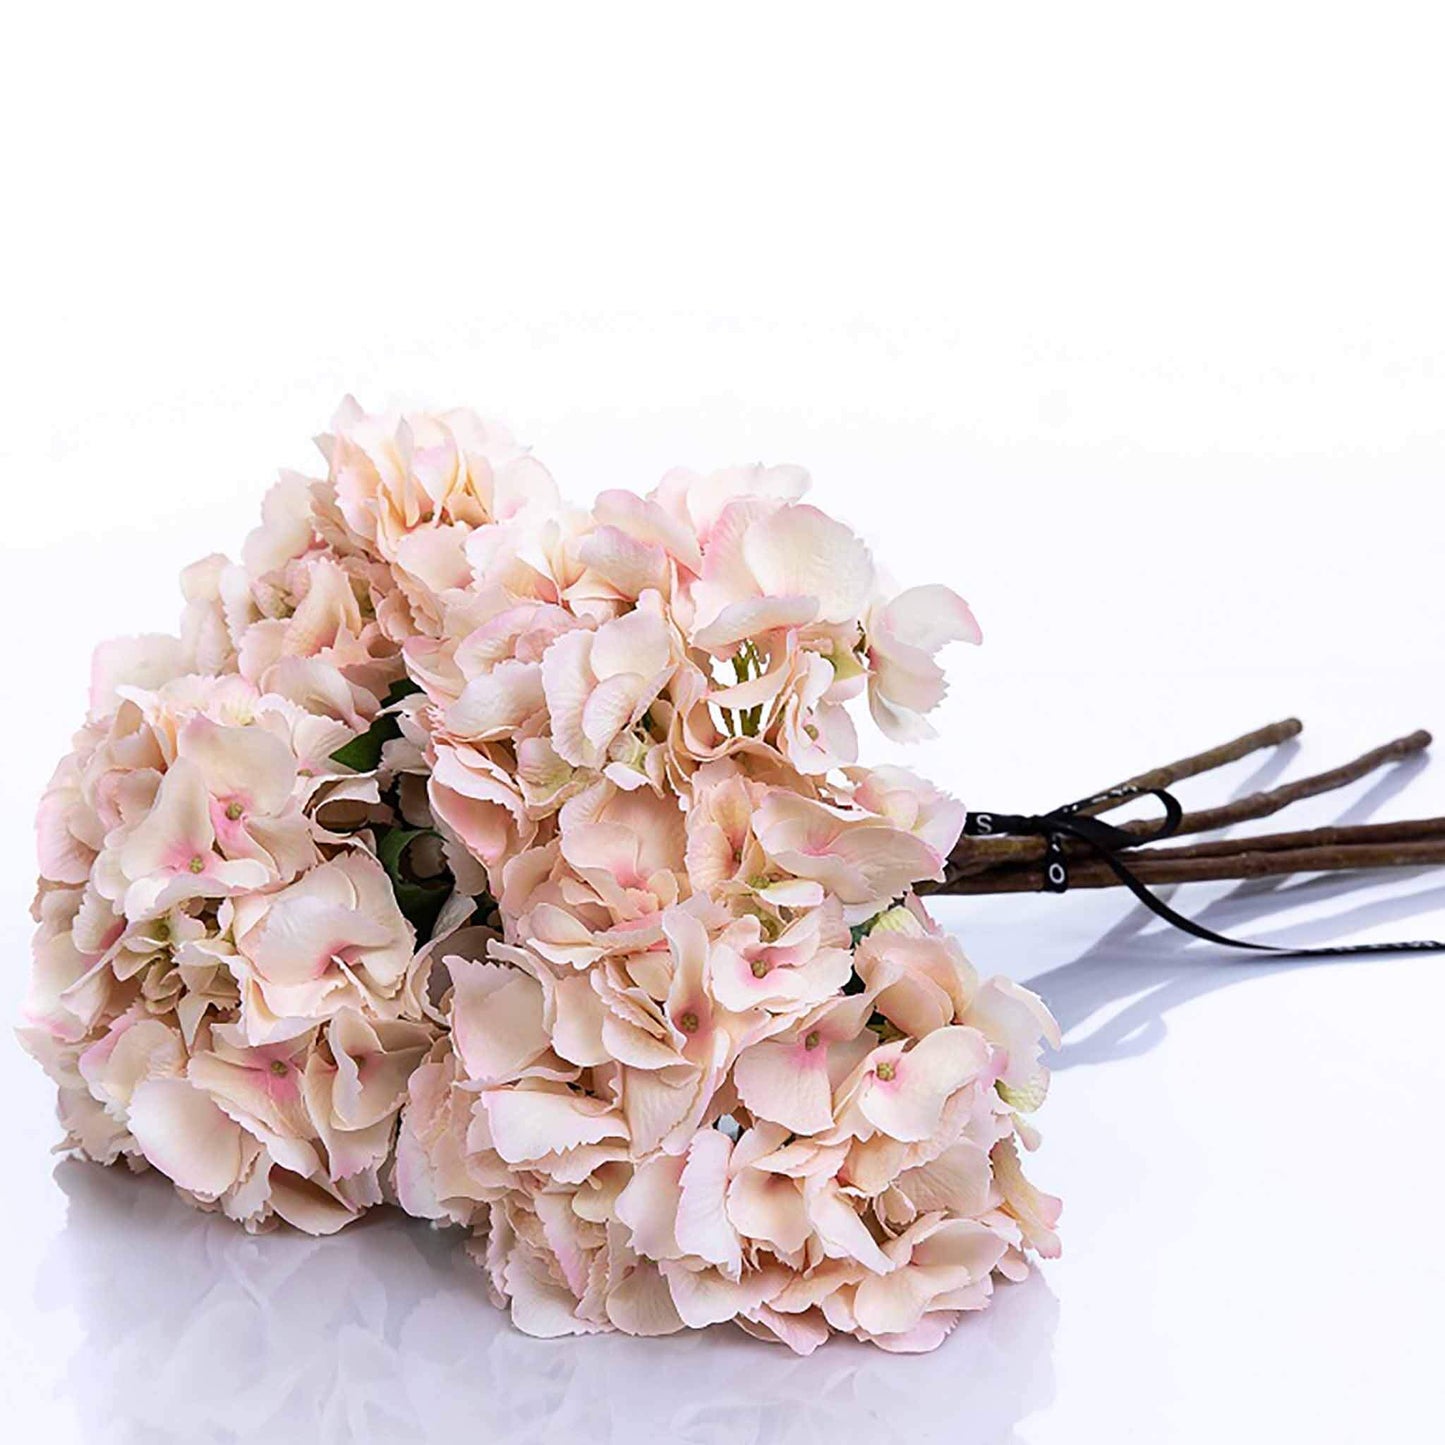 Large Luxury pale pink hydrangea hand ties bouquet